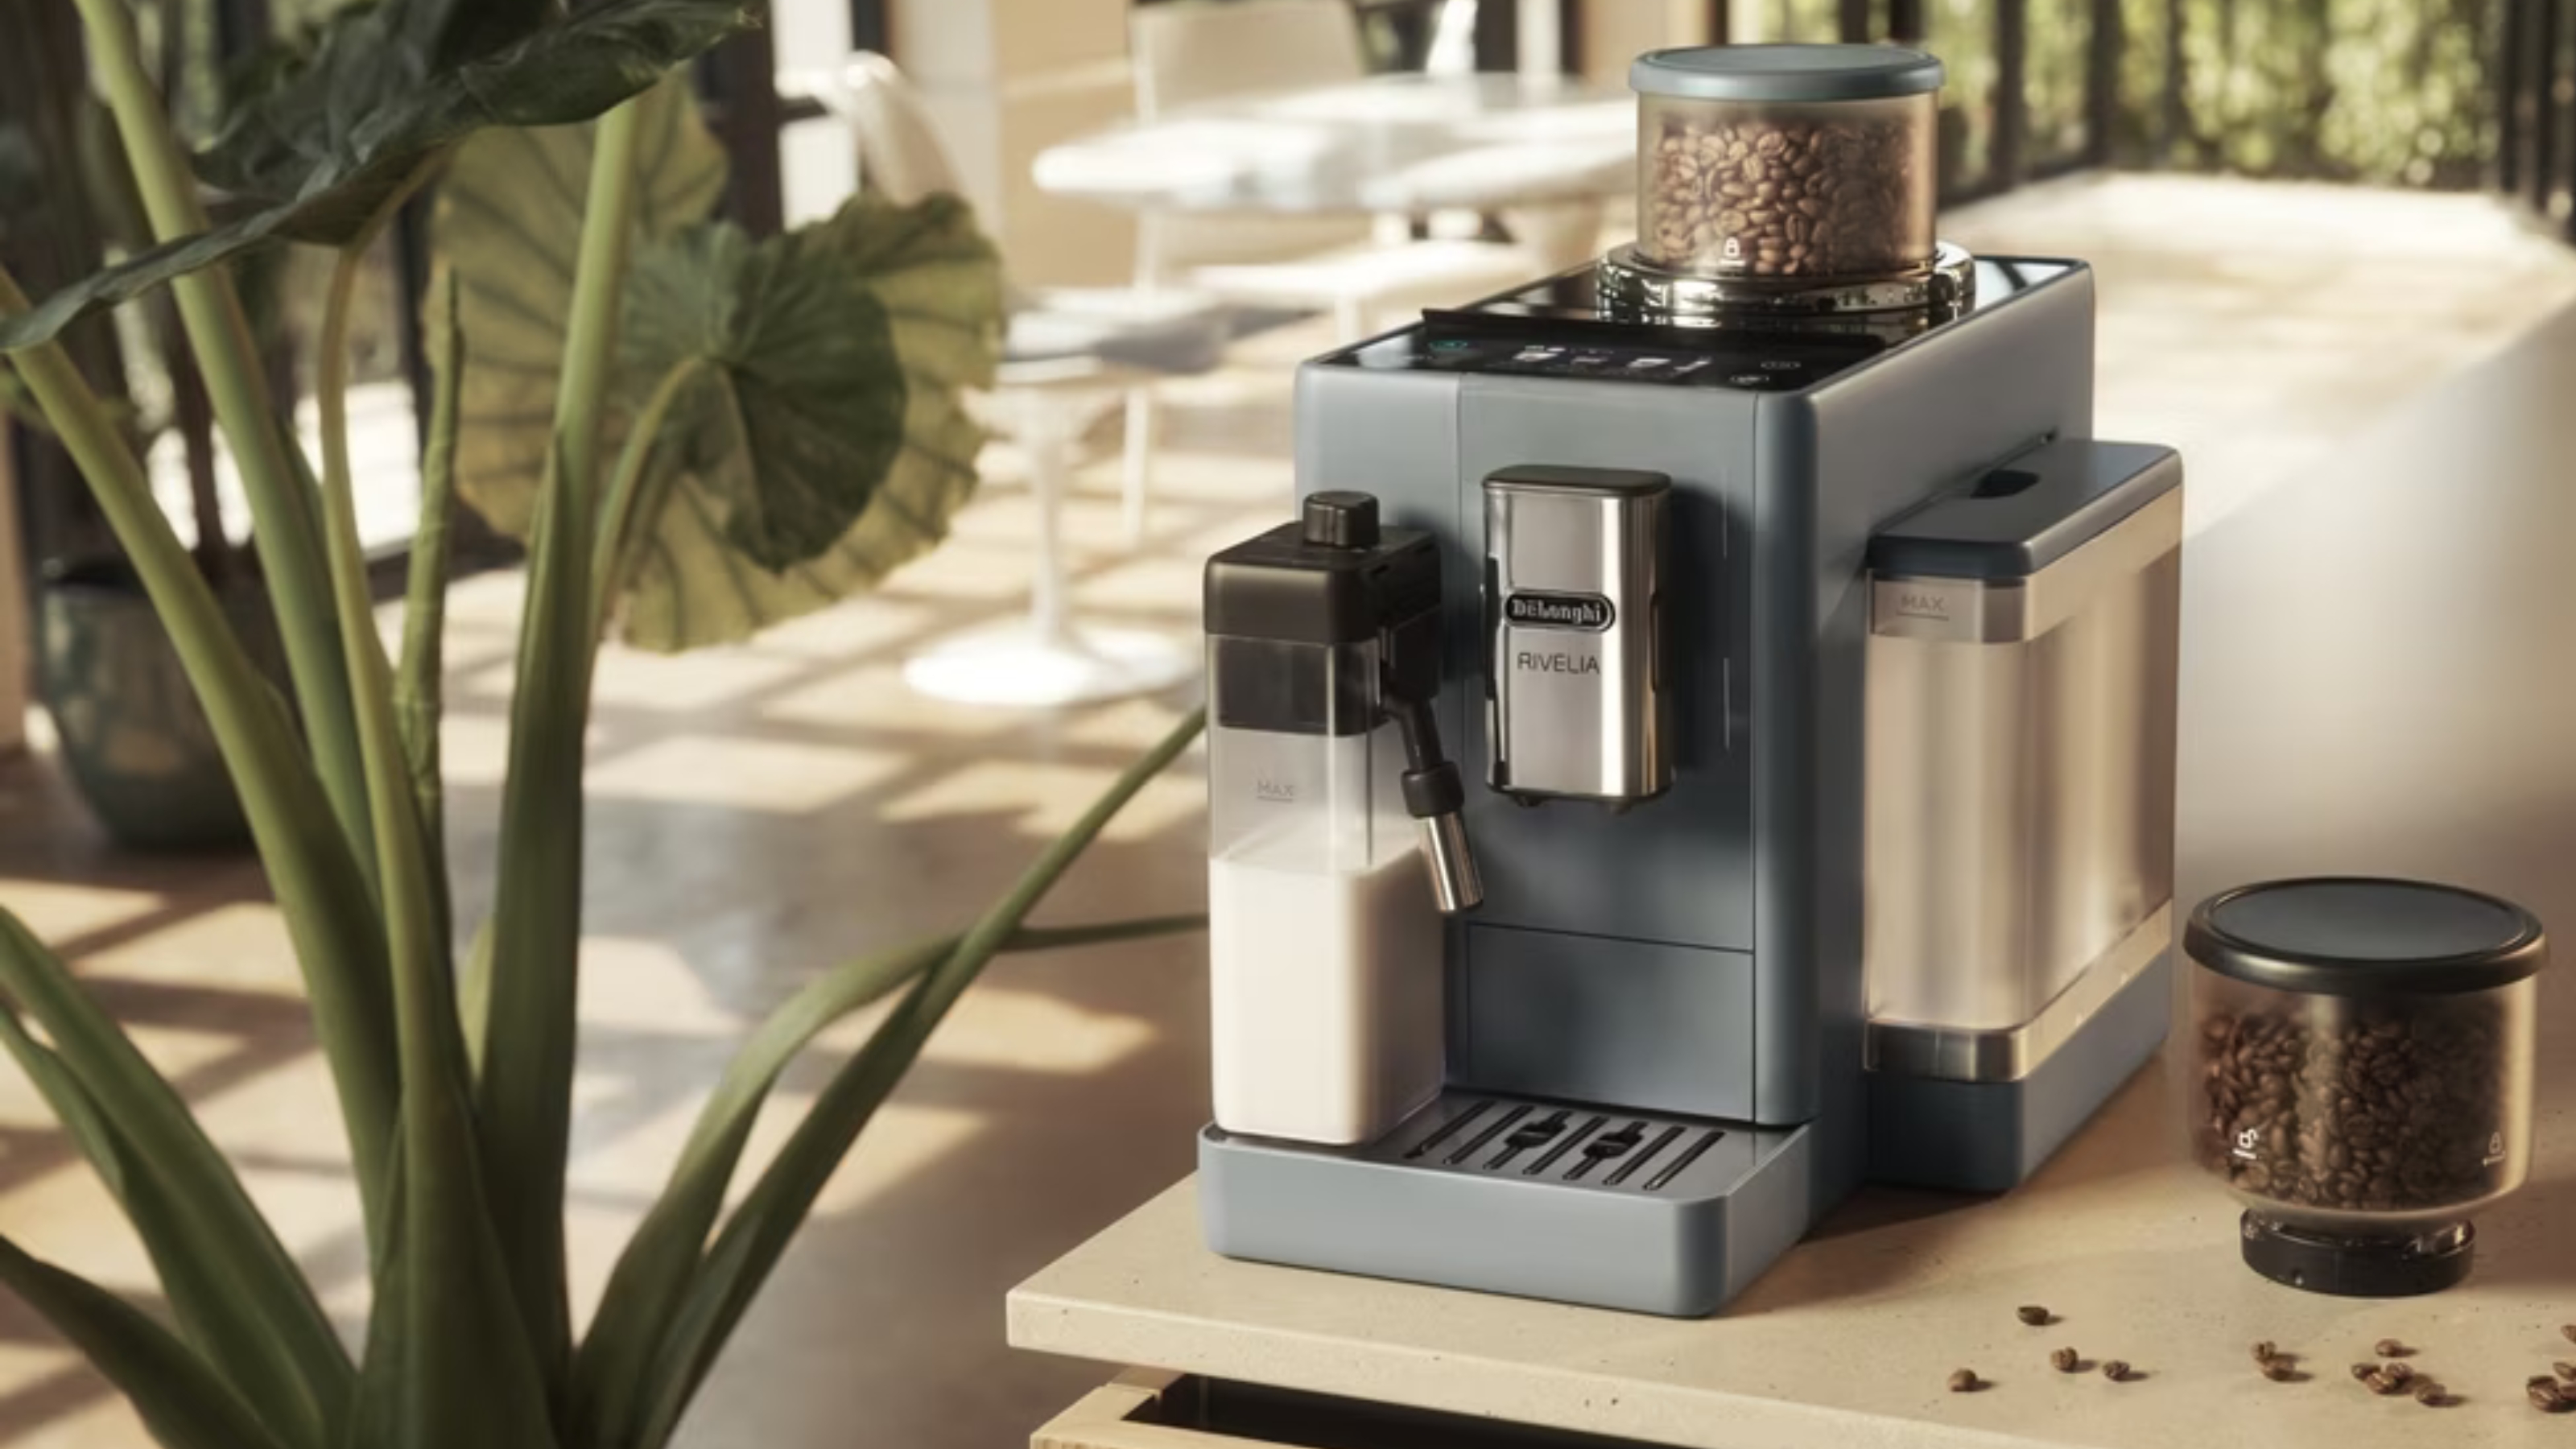 De'Longhi Rivelia coffee maker review